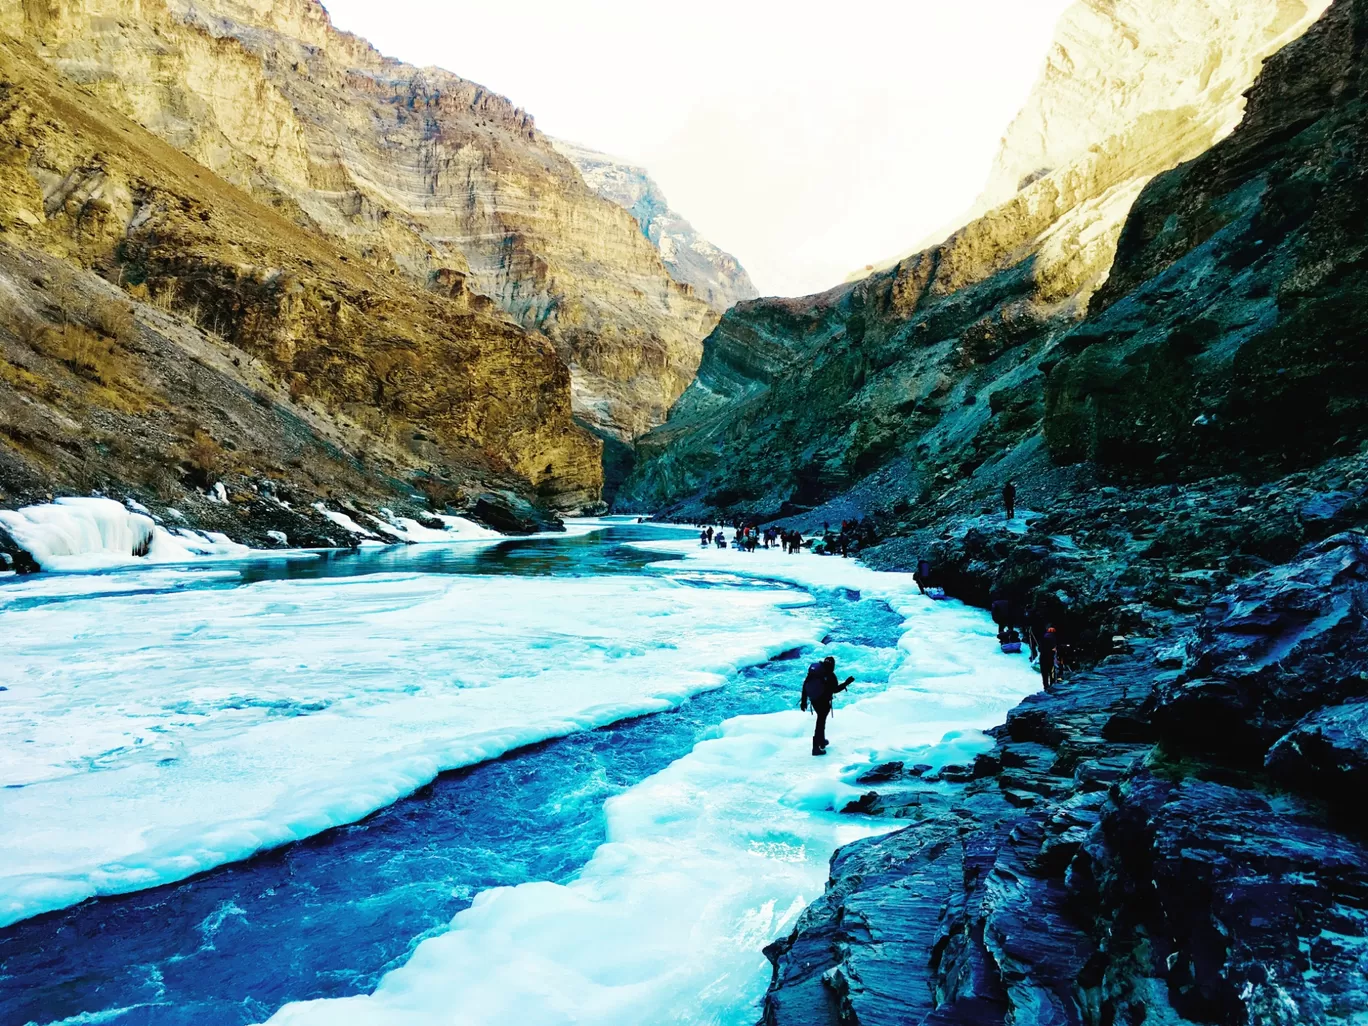 Photo of Chadar trek - Trekking In Ladakh - Frozen River Trekking In Ladakh By Nagaraj S